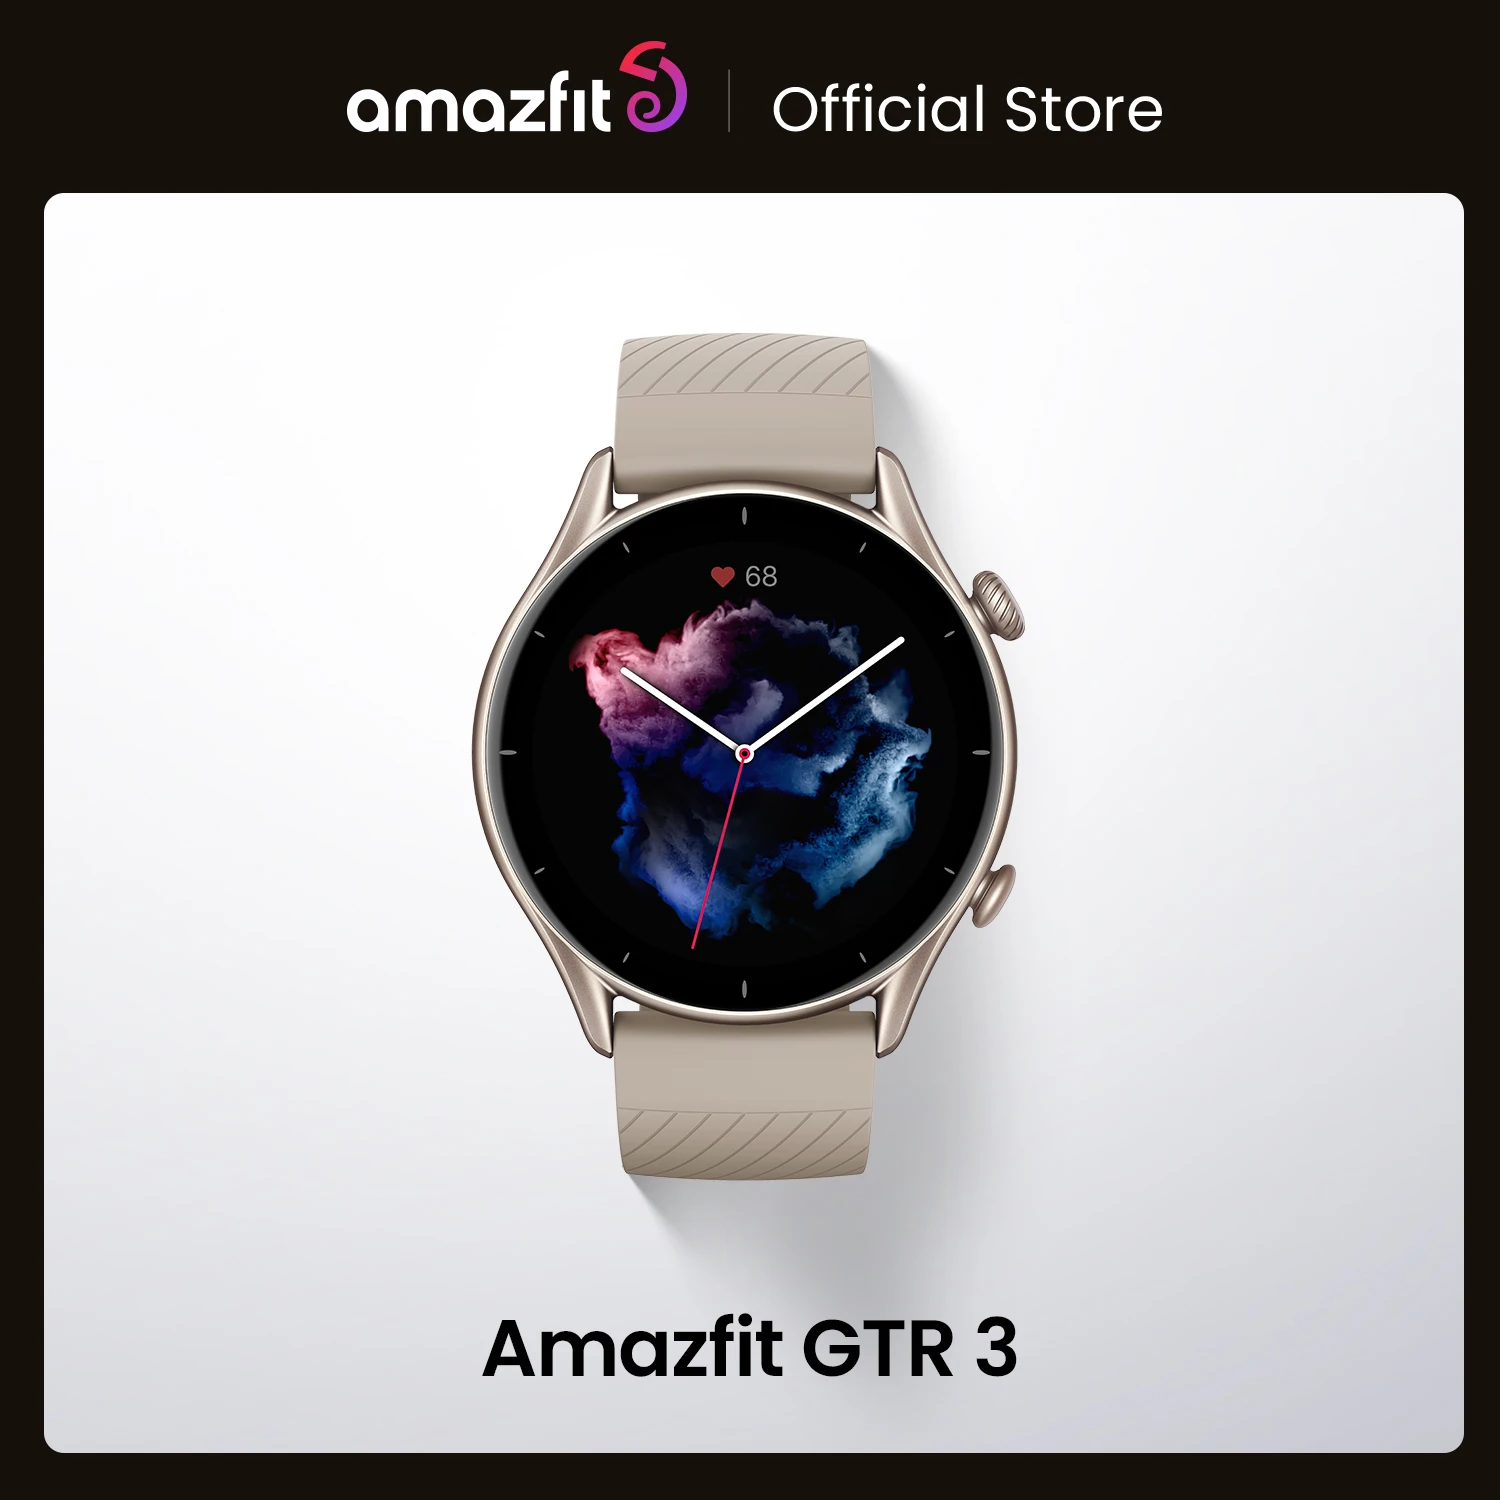 

Global Version Amazfit GTR 3 GTR-3 GTR3 Smartwatch 1.39" AMOLED Display Alexa Built-in GPS Zepp OS Smart Watch for Android IOS